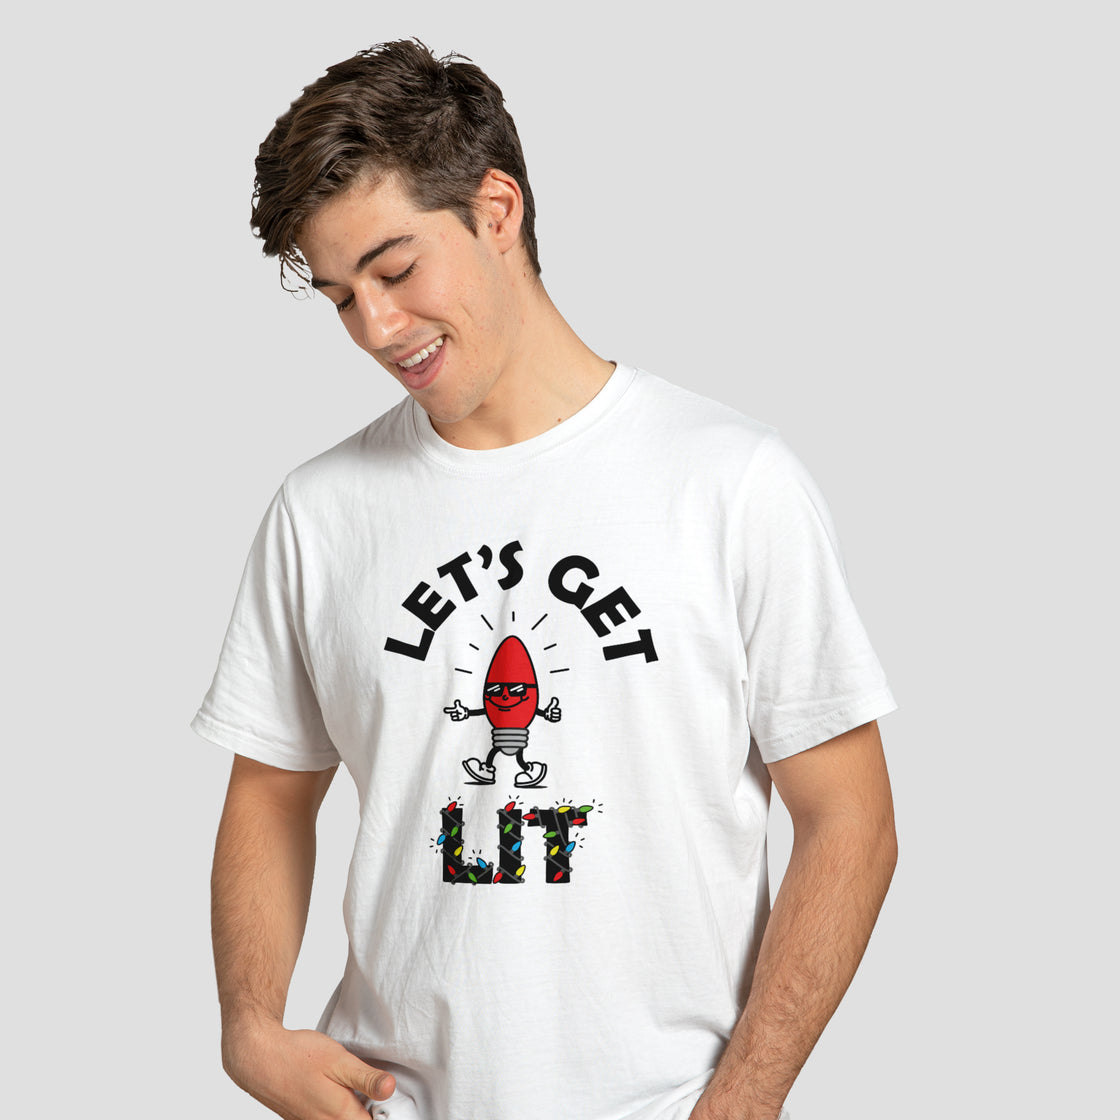 Let's Get Lit - T-Shirt - Custom Gifts 